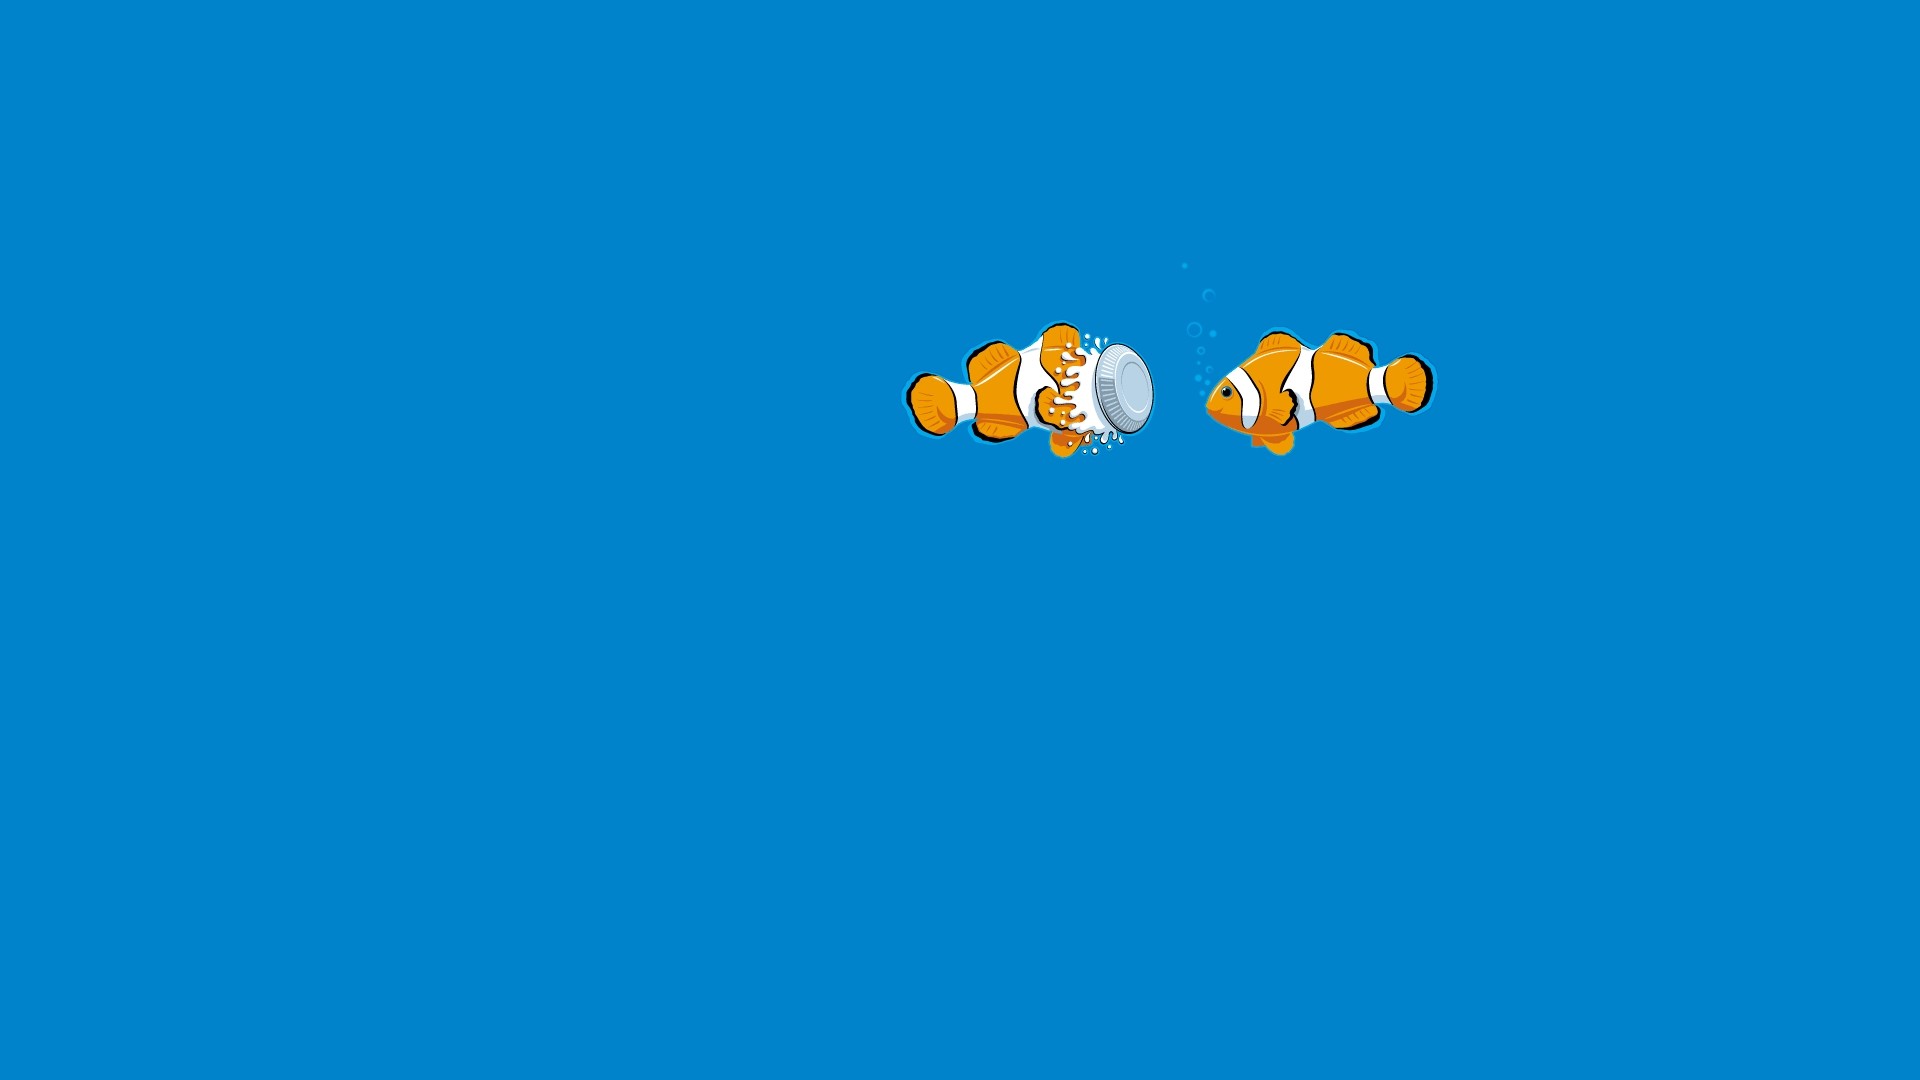 1920x1080 Blue Fish Underwater Clown Fish Pie humor funny ocean sea wallpaper  